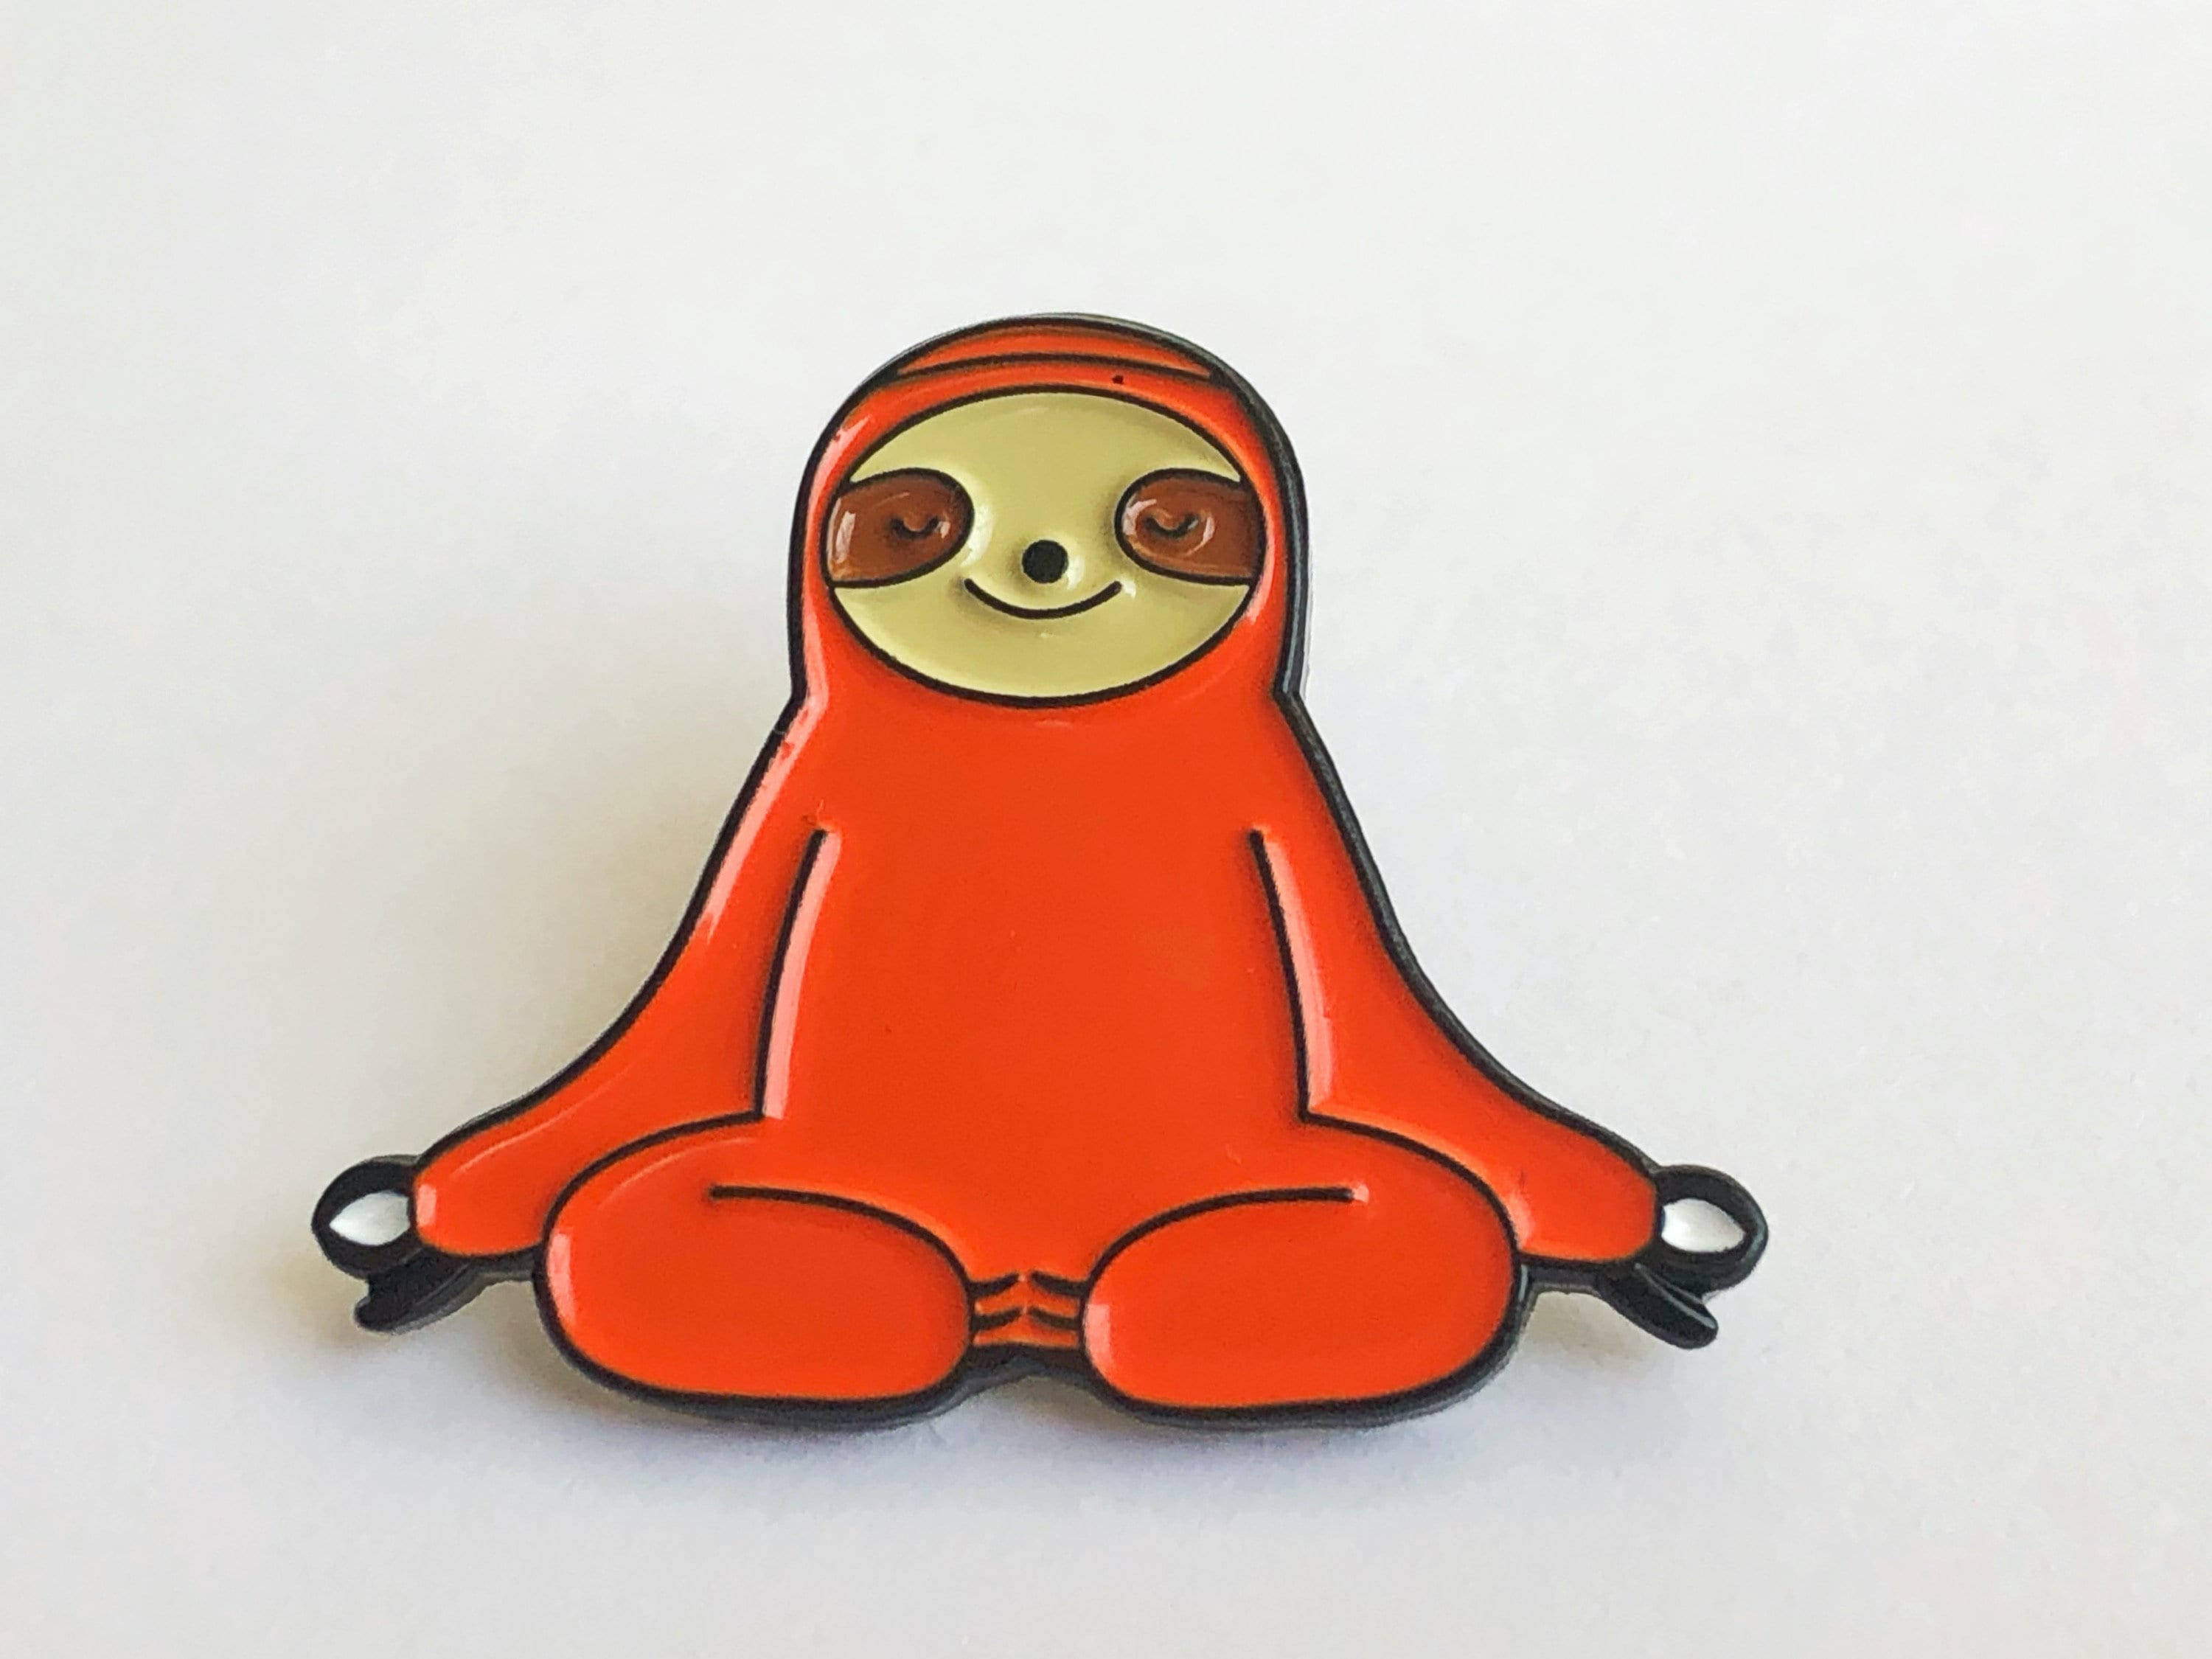 The Meditating Yoga Sloth Pin